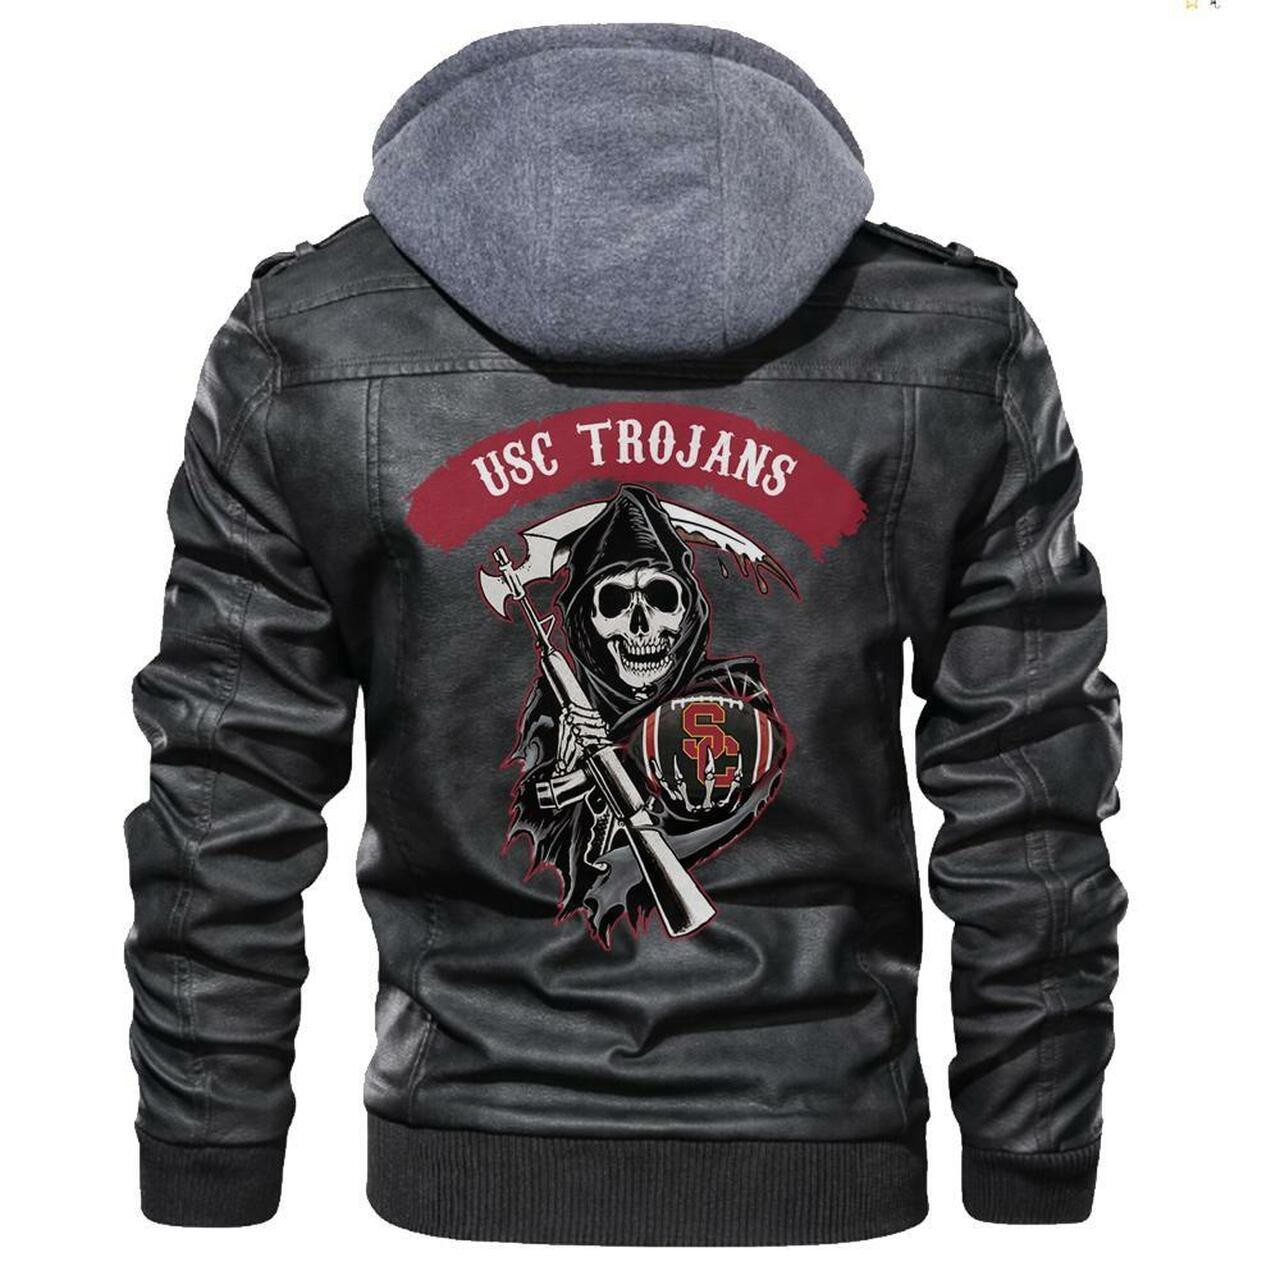 Top leather jacket Sells Best on Techcomshop 108